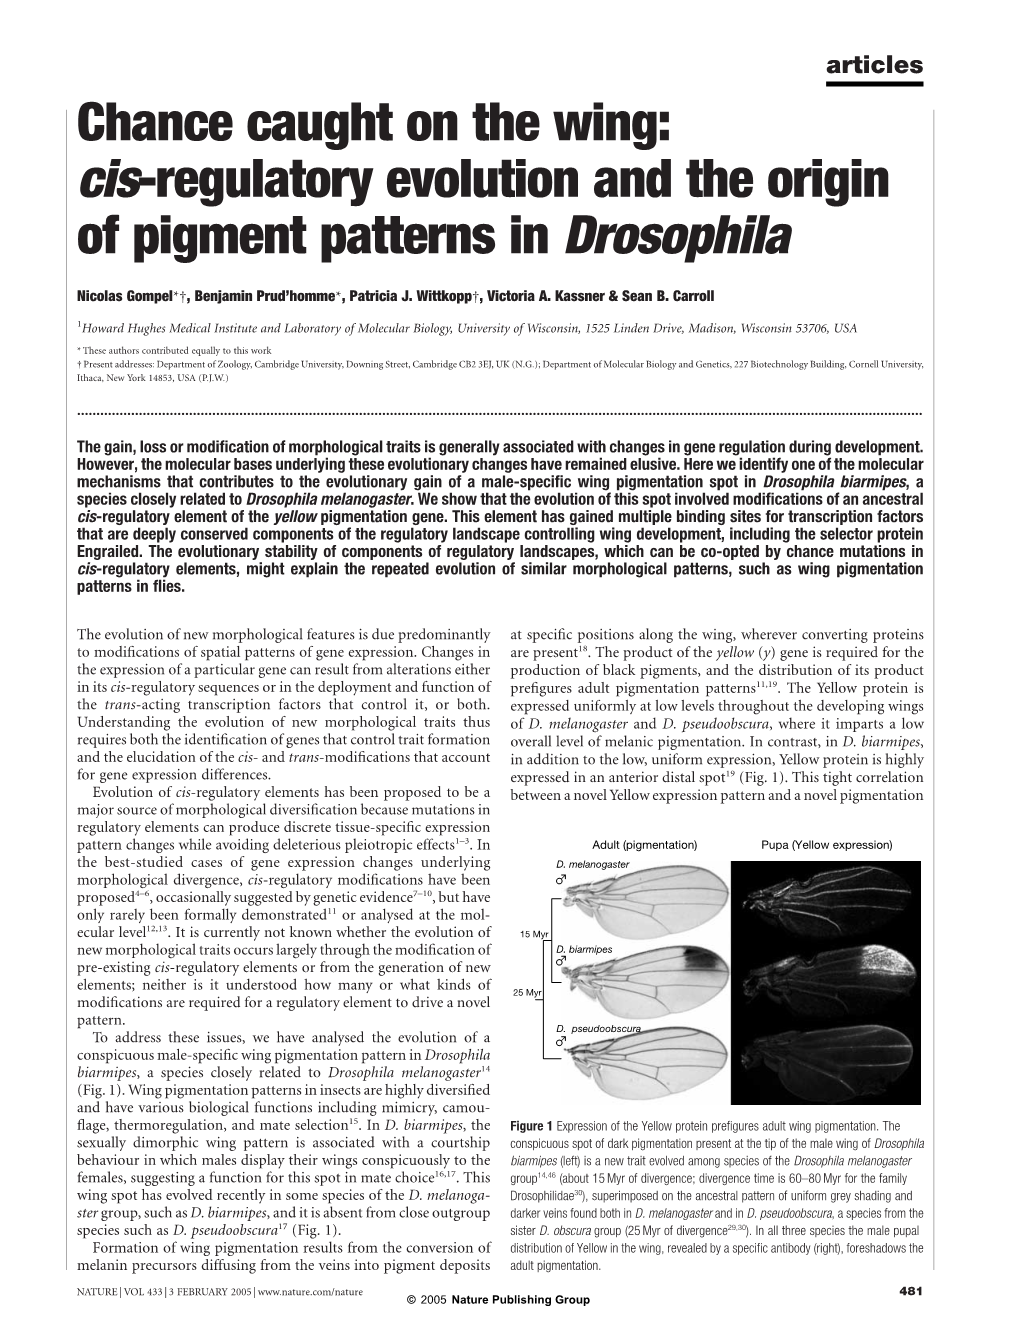 Cis-Regulatory Evolution and the Origin of Pigment Patterns in Drosophila